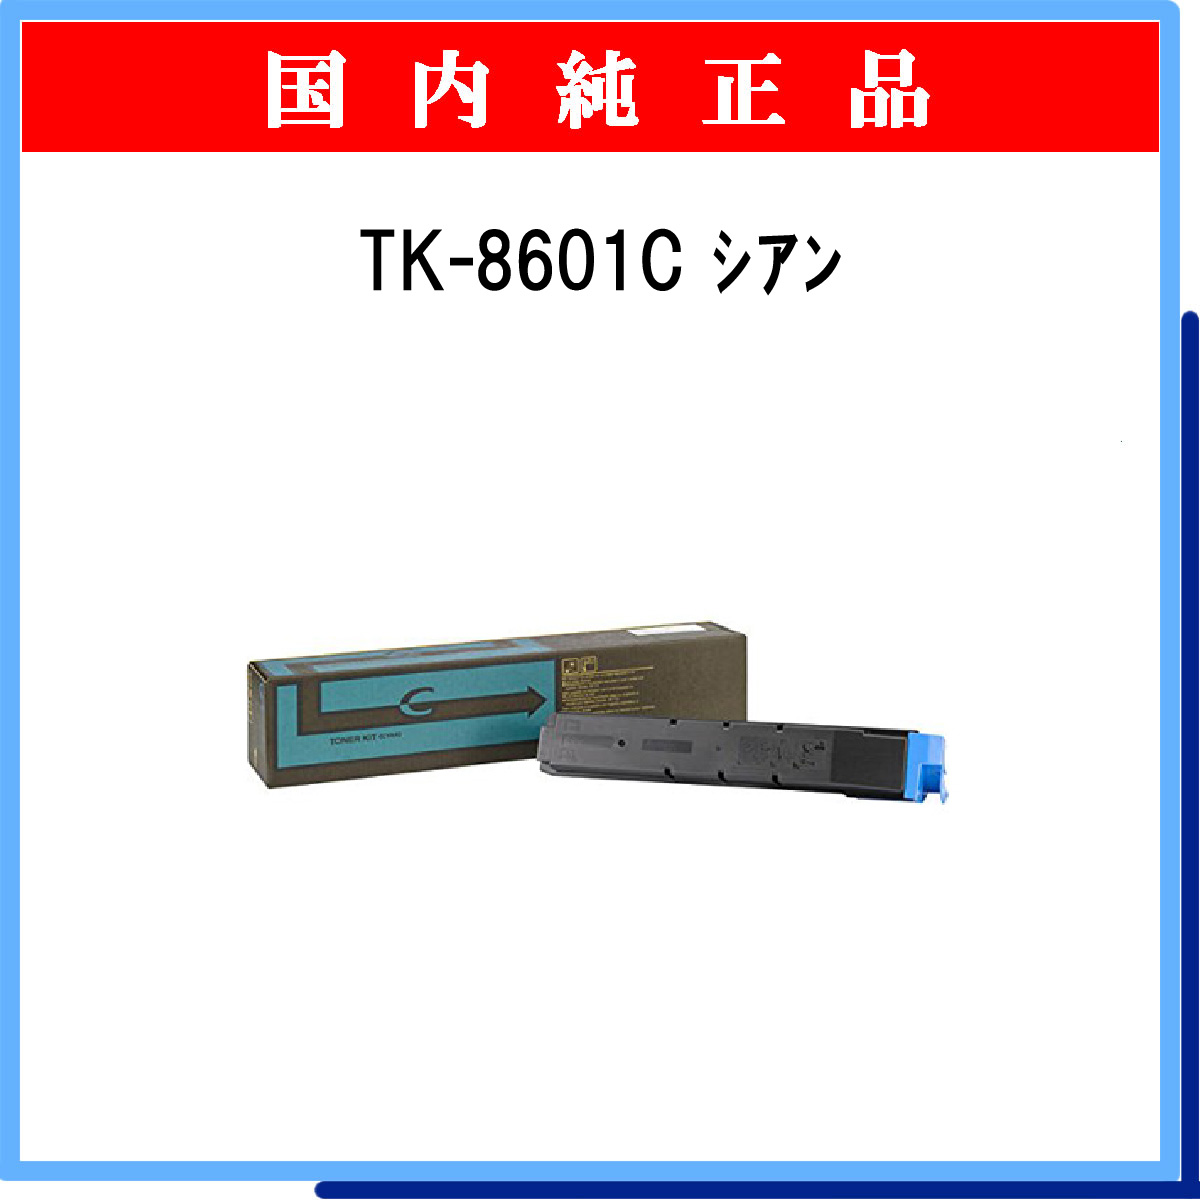 TK-8601C 純正 - ウインドウを閉じる